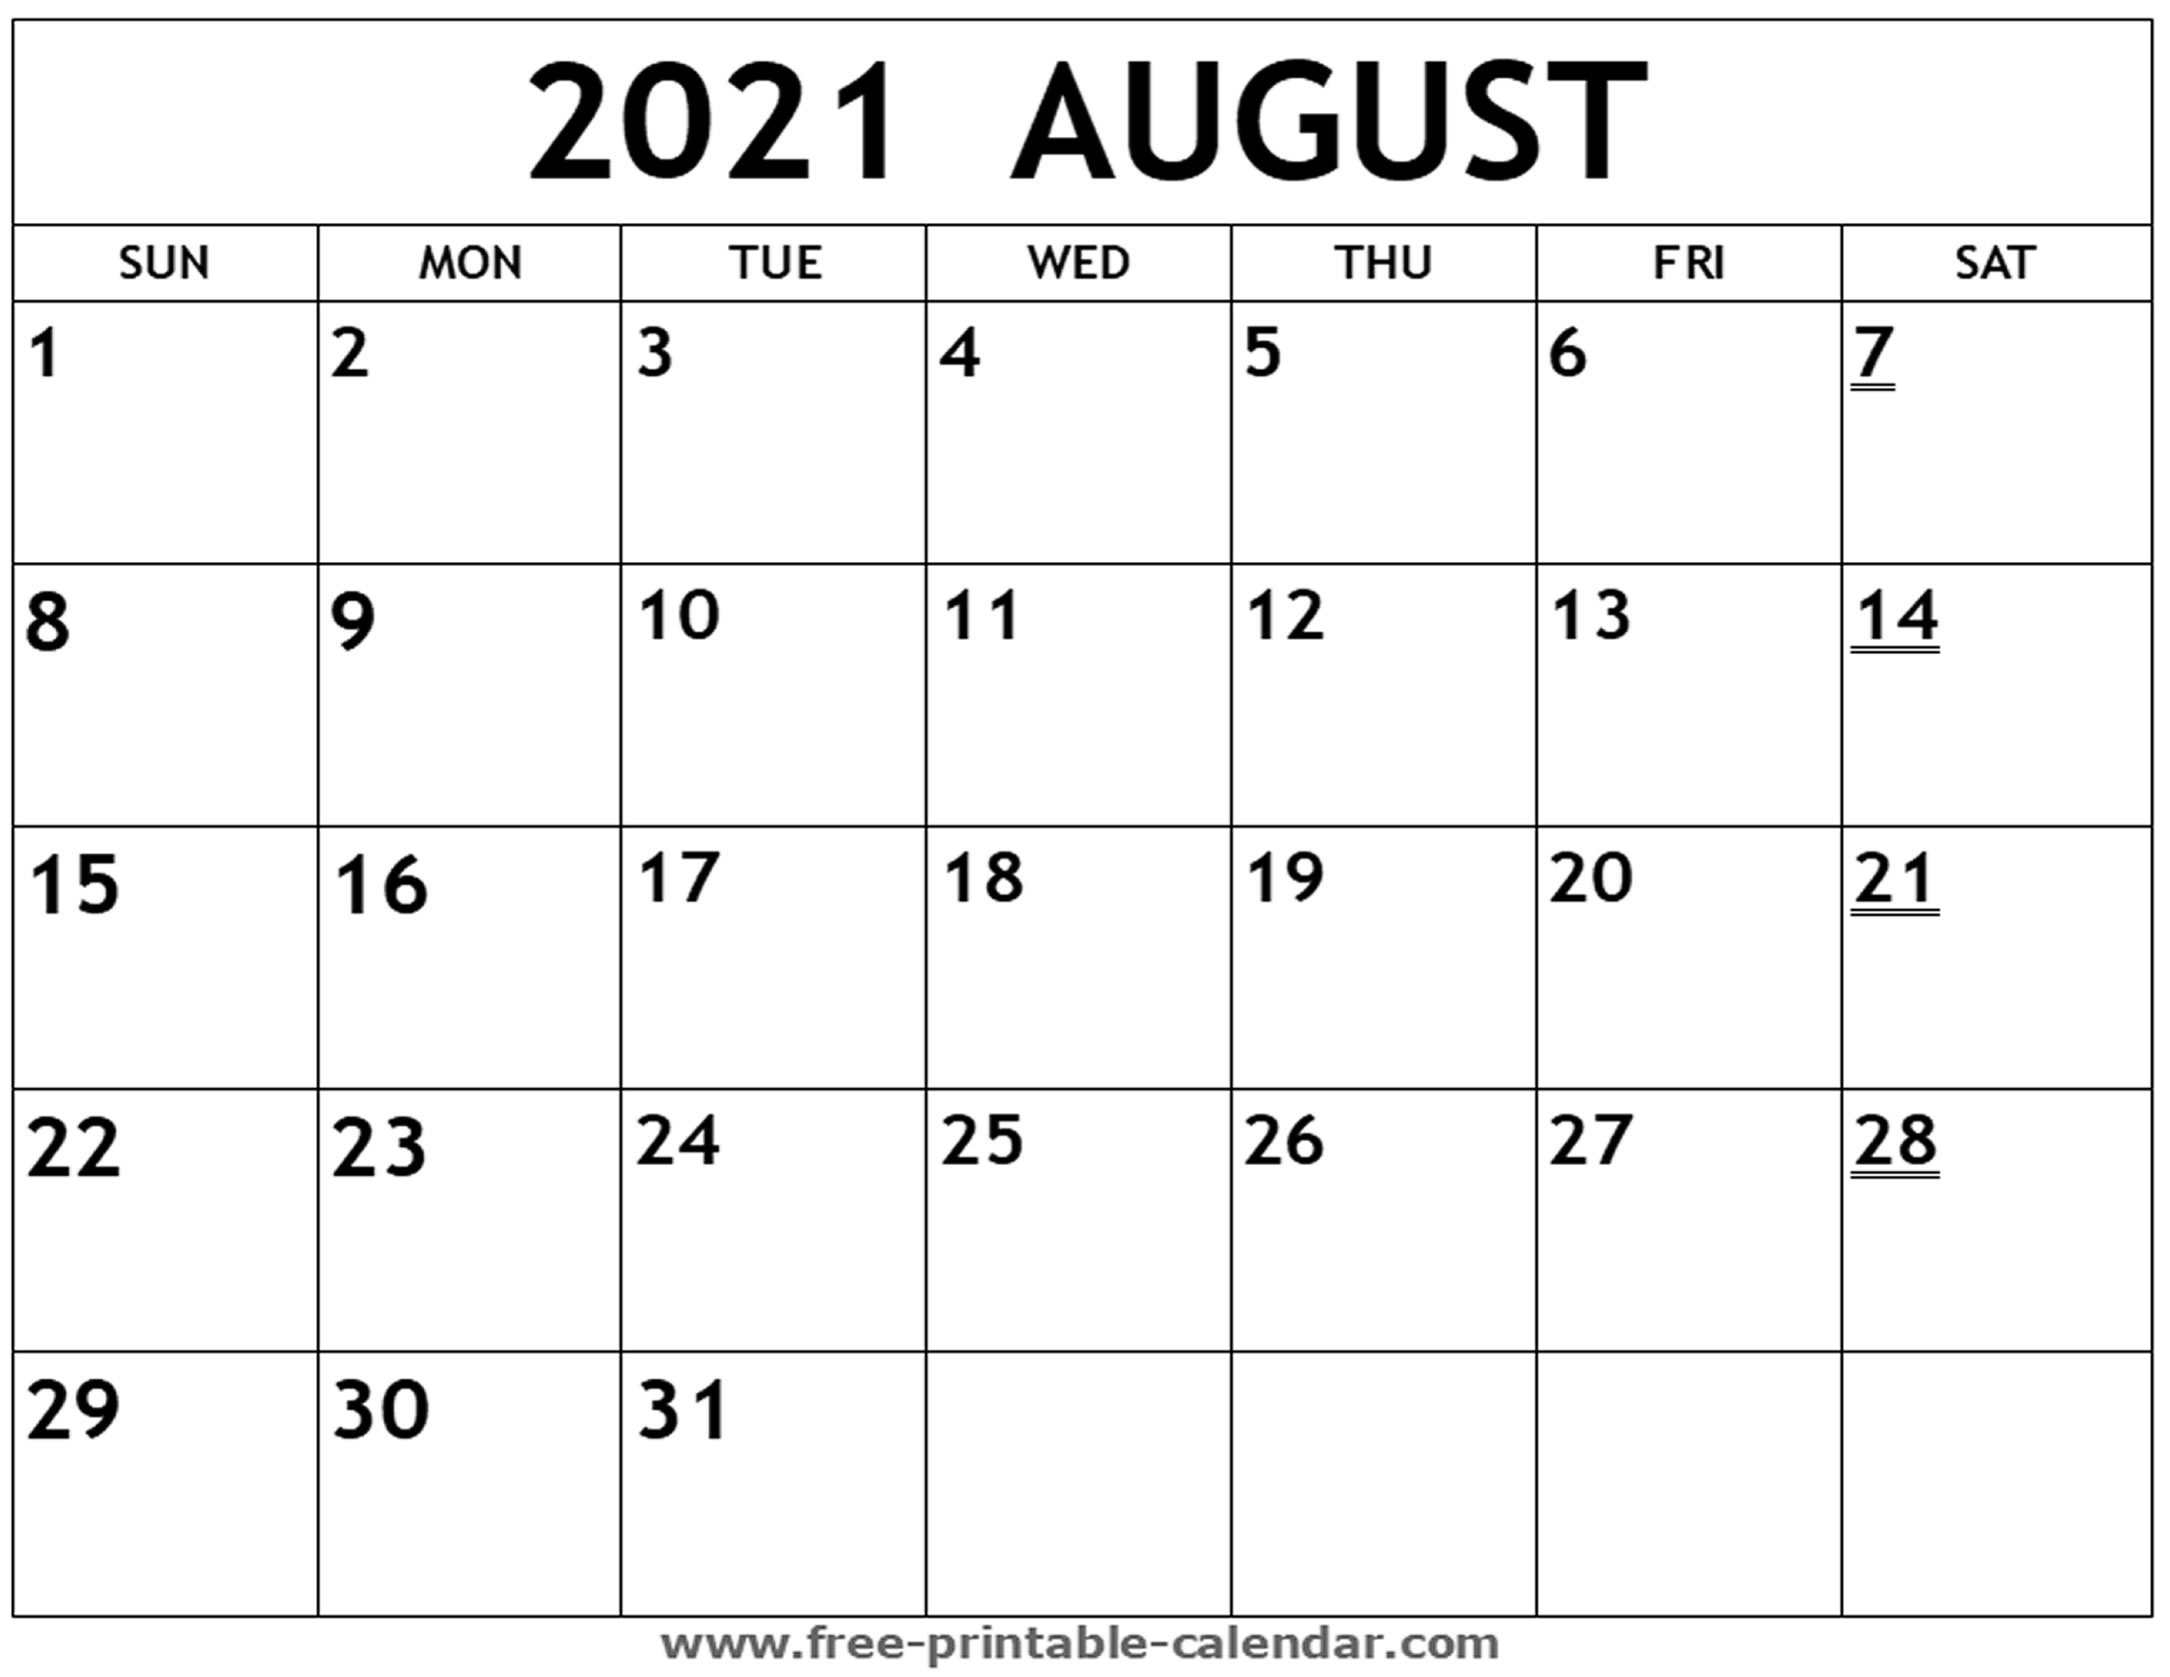 Printable 2021 August Calendar - Free-Printable-Calendar